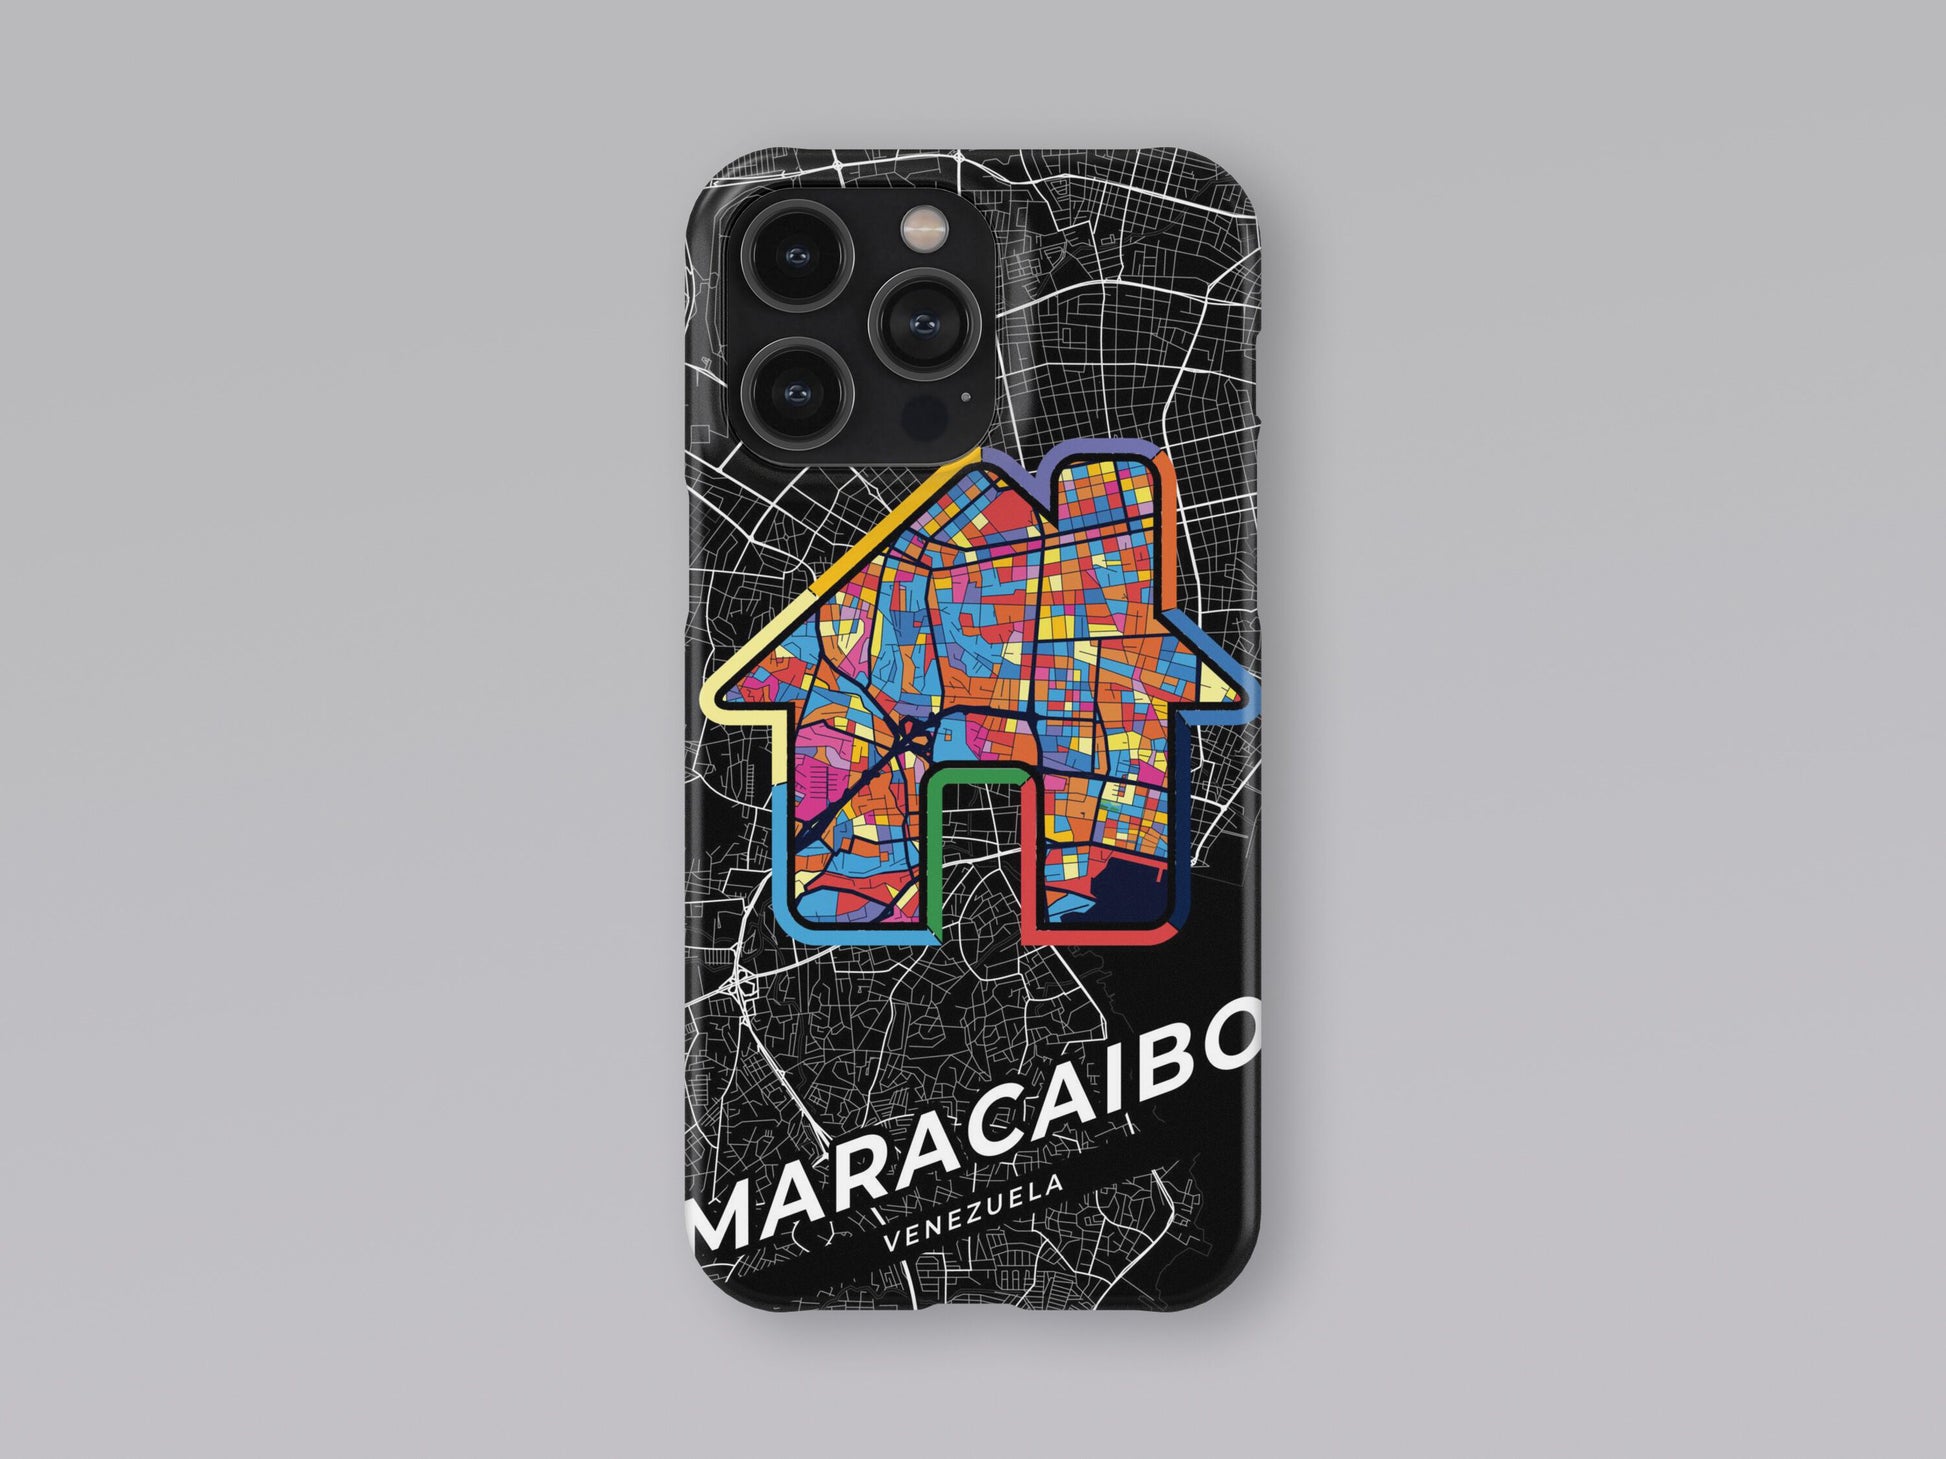 Maracaibo Venezuela slim phone case with colorful icon. Birthday, wedding or housewarming gift. Couple match cases. 3